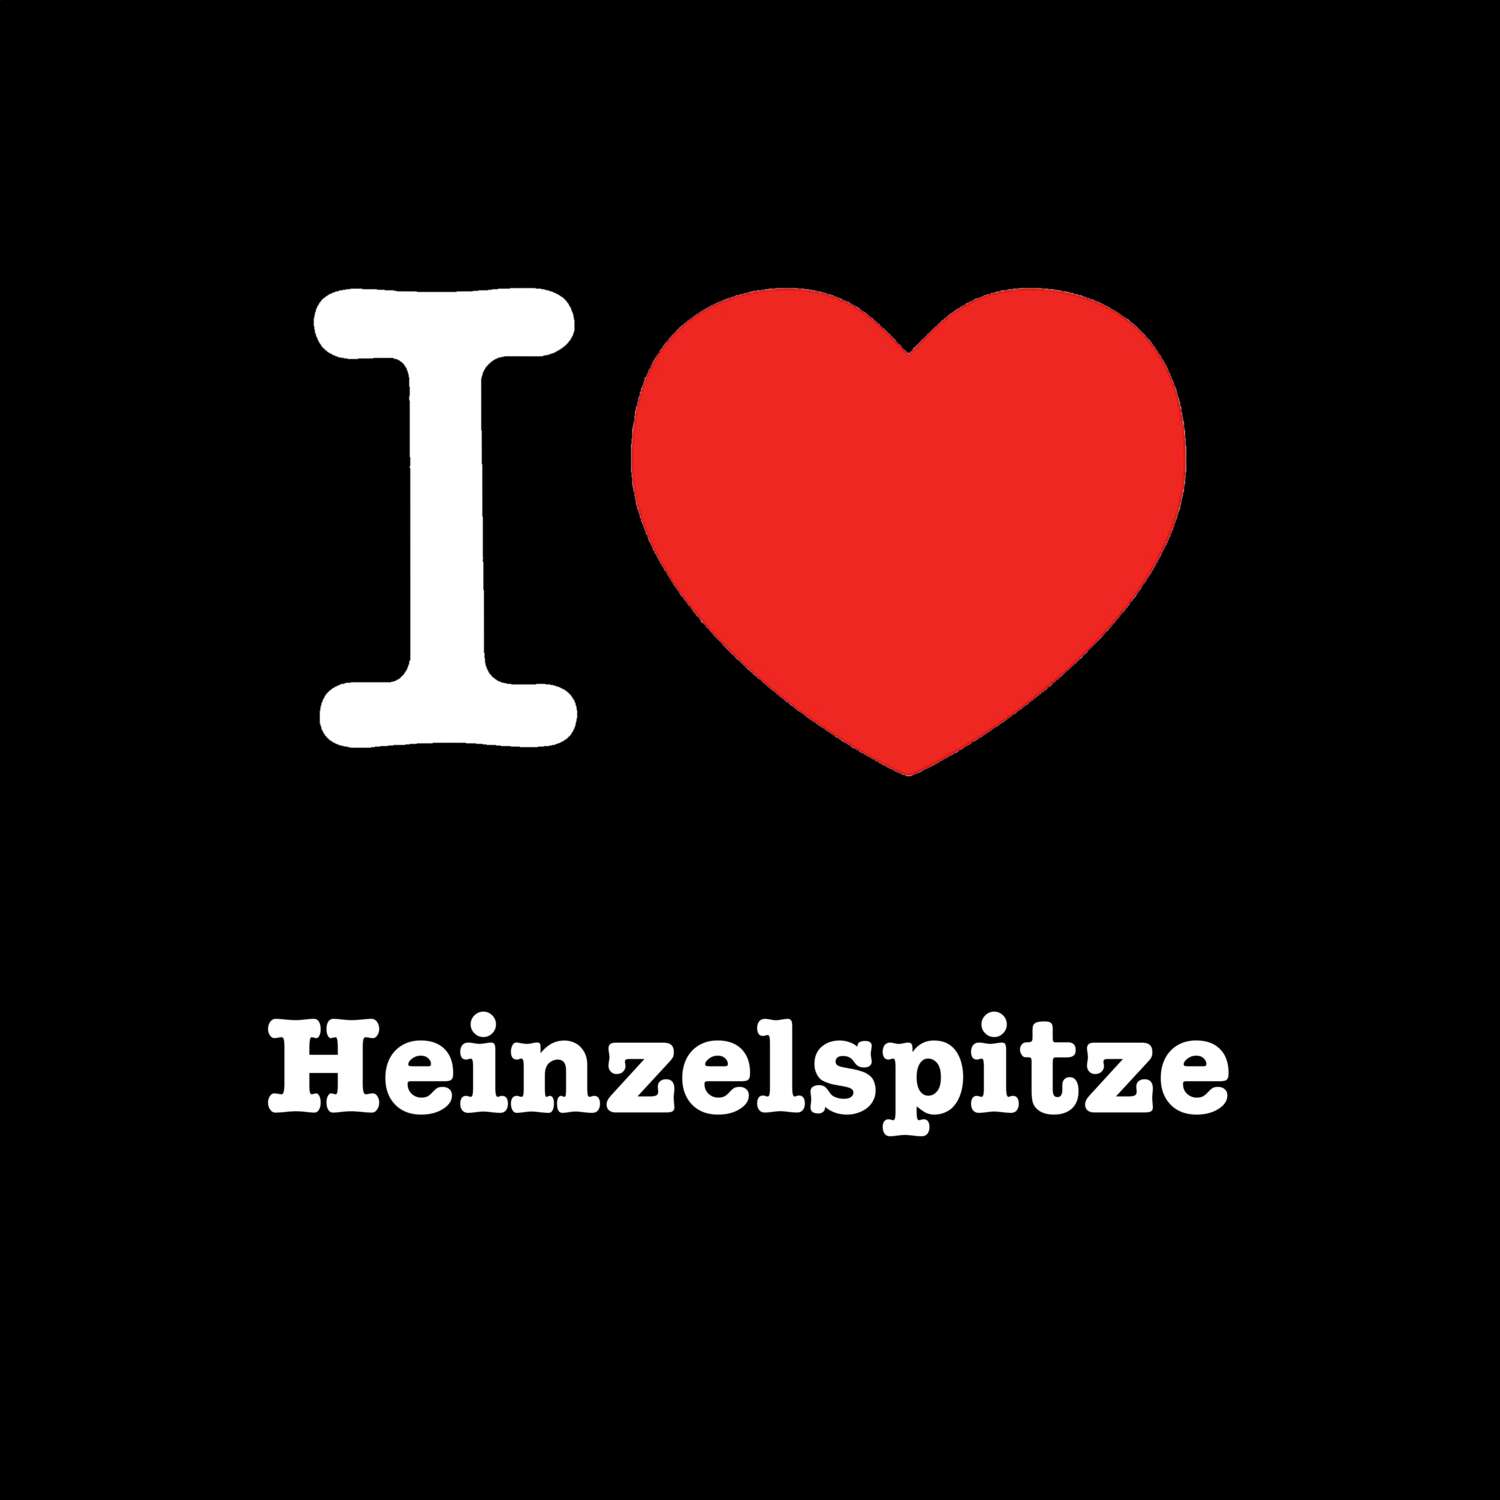 Heinzelspitze T-Shirt »I love«